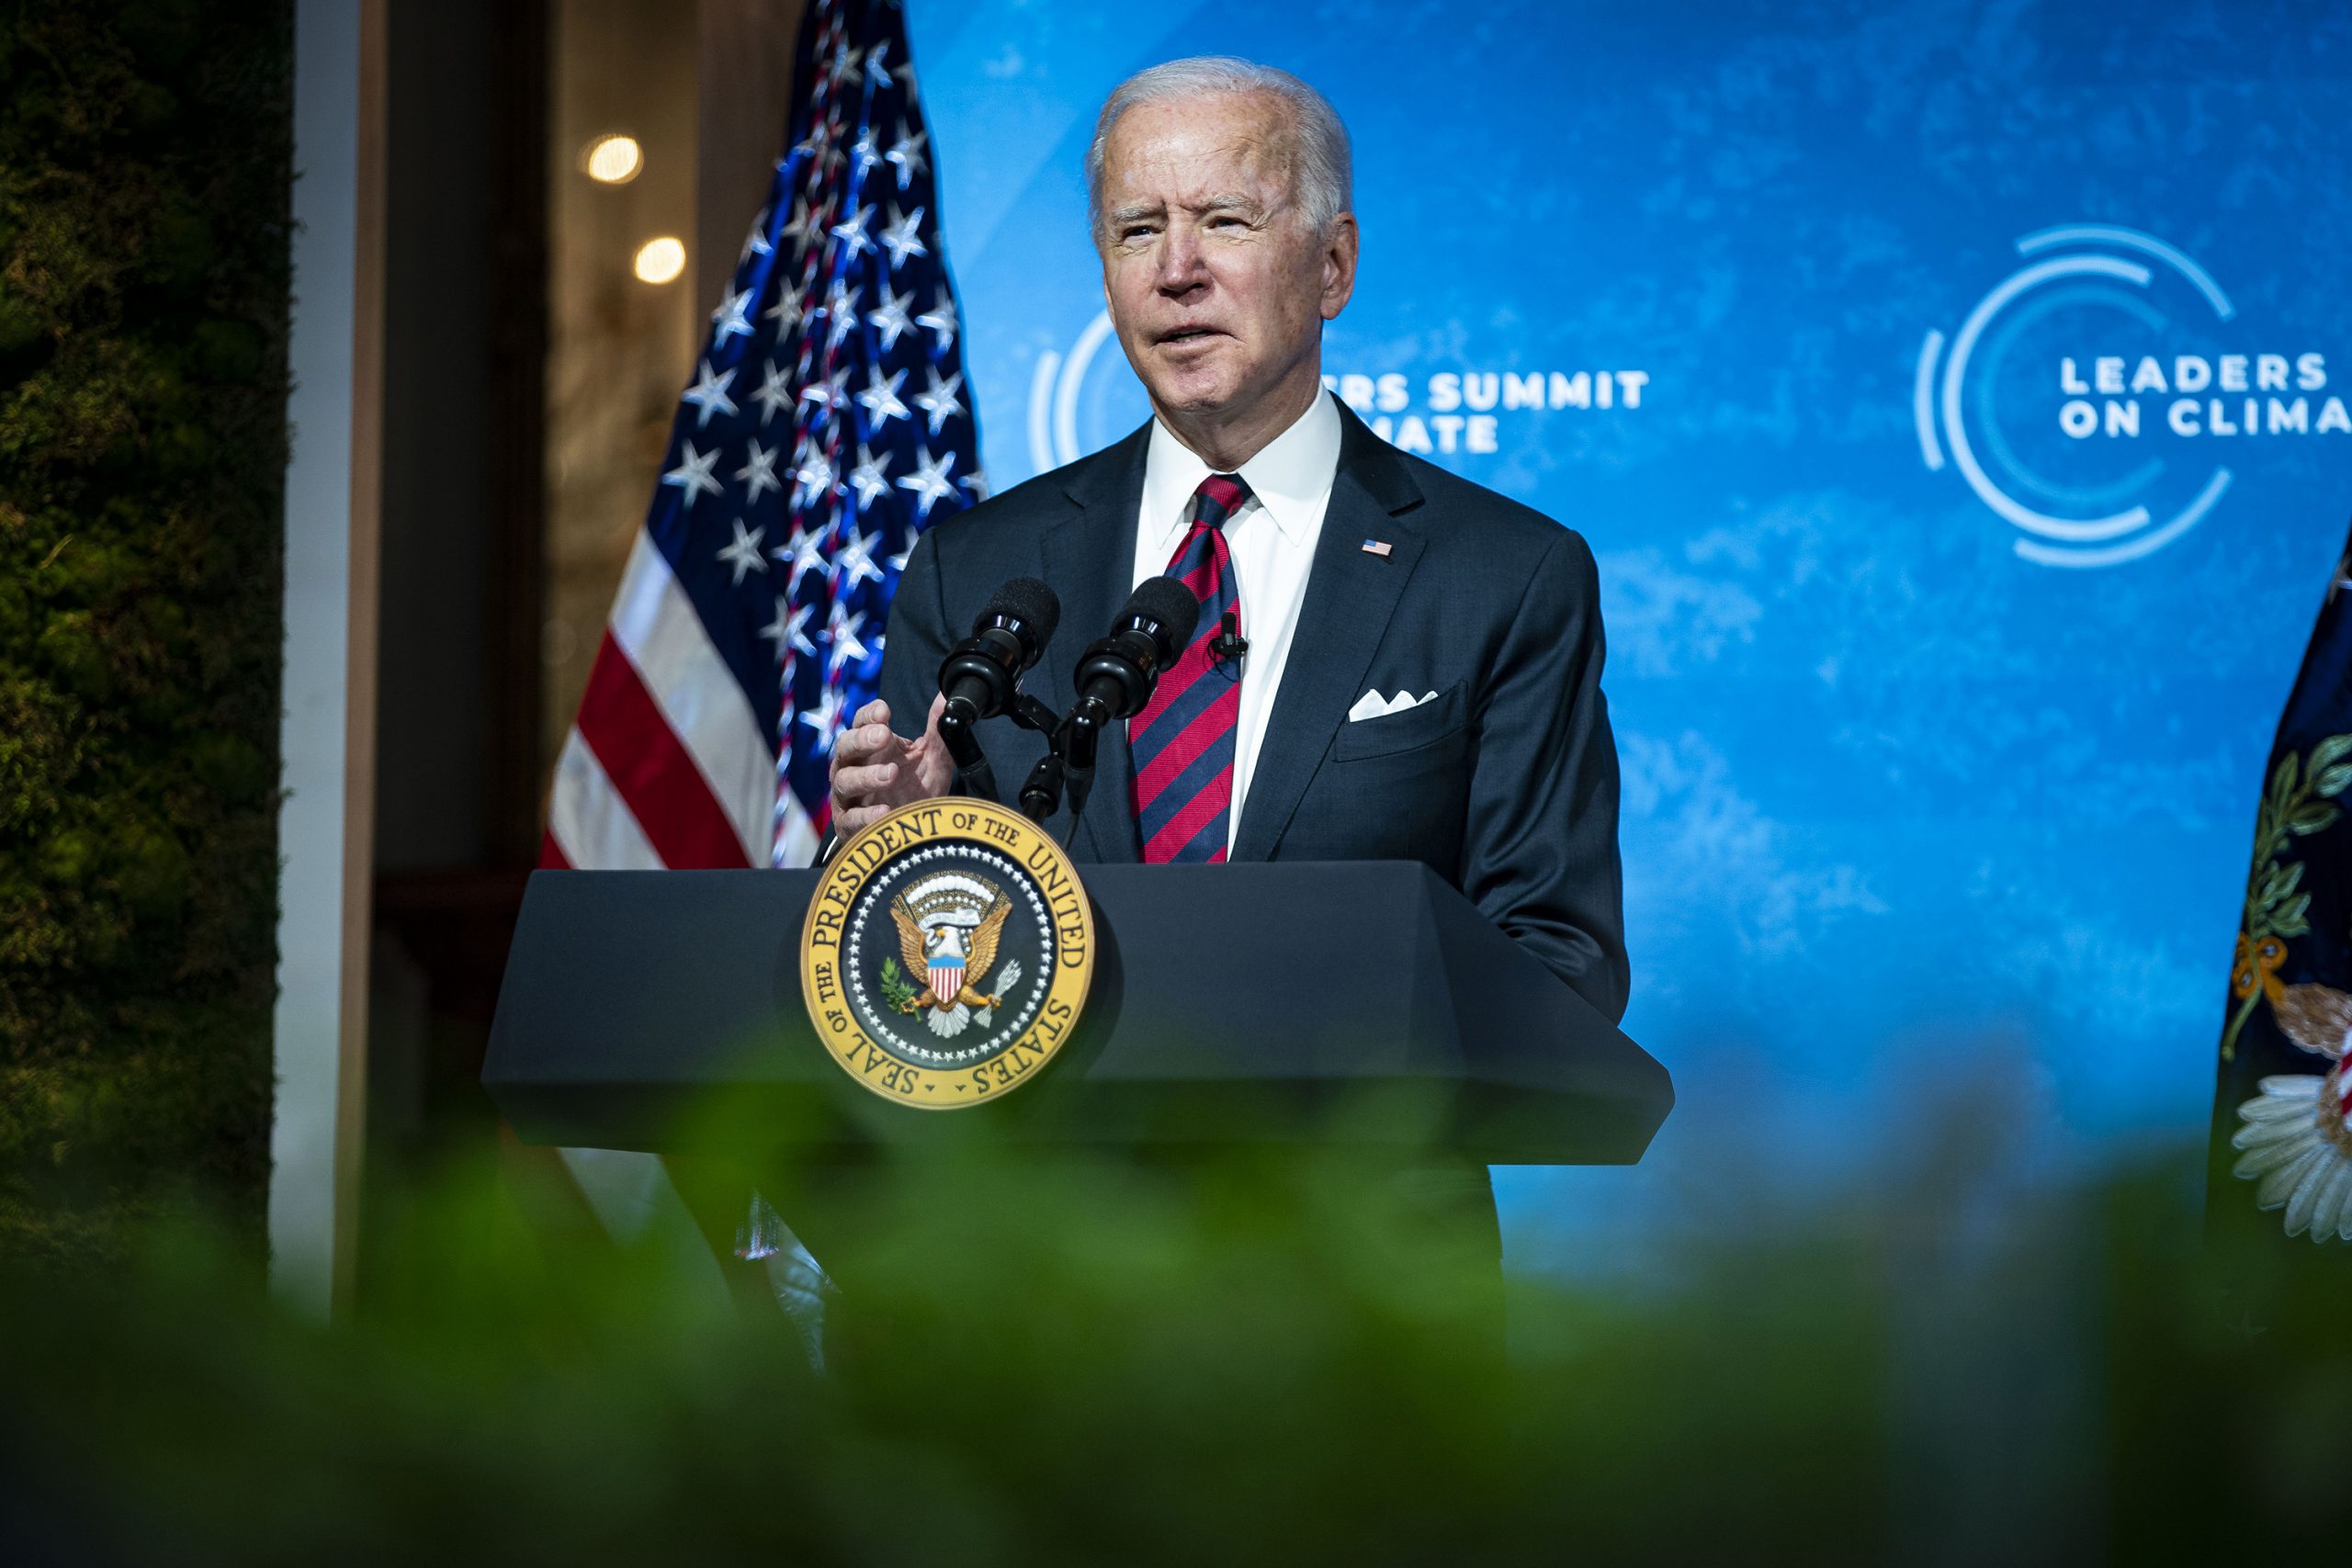 WASHINGTON, DC - APRIL 22: U.S. President Joe Biden delivers remarks during a virtual Leaders Summi...